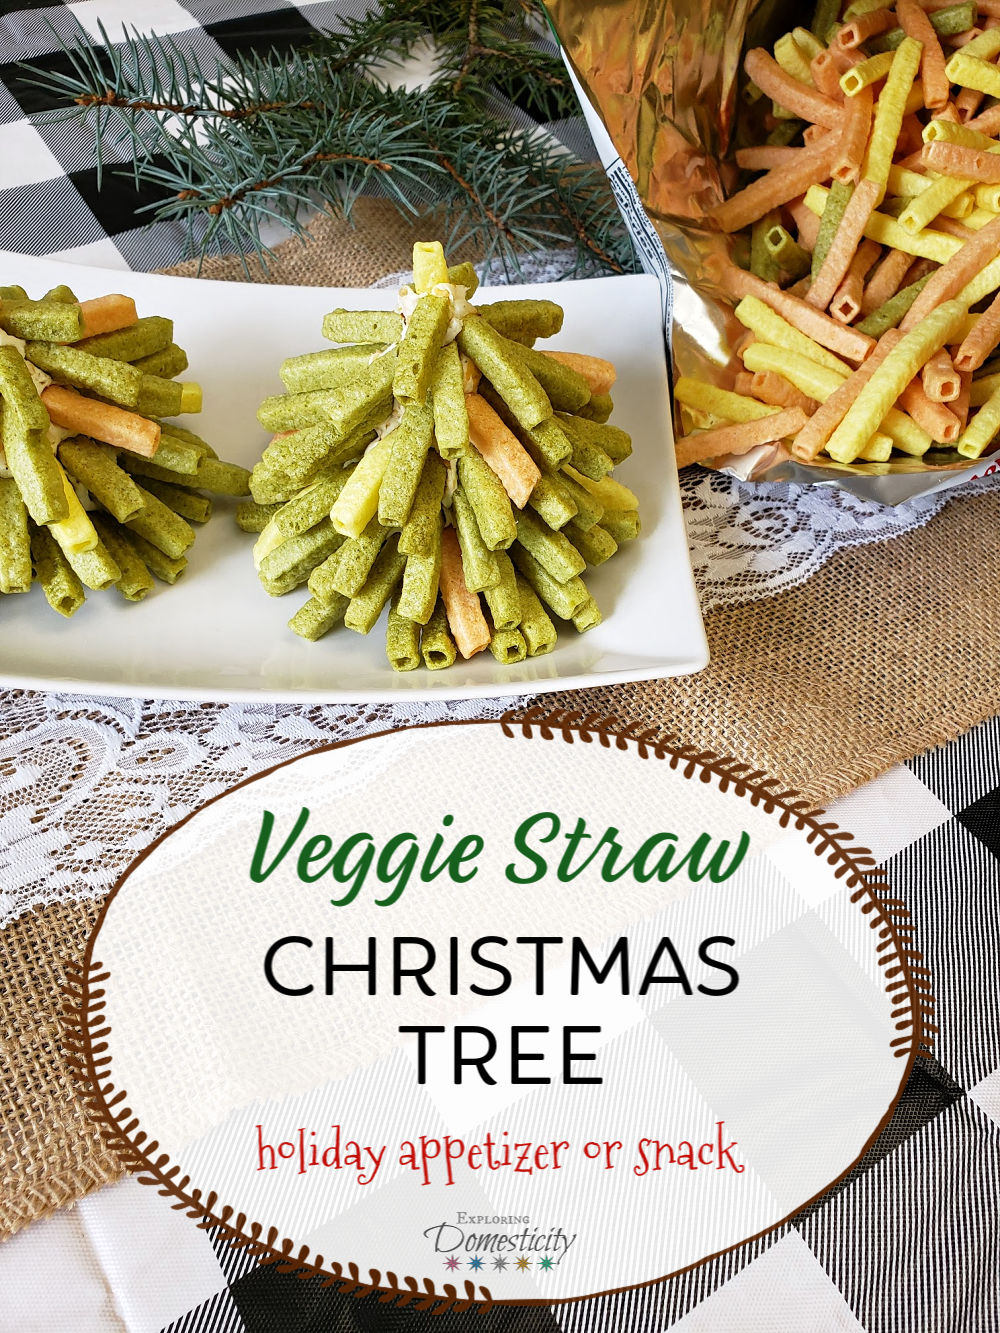 https://exploringdomesticity.com/wp-content/uploads/2019/11/Veggie-Straw-Christmas-Trees-holiday-appetizer-or-snack.jpg